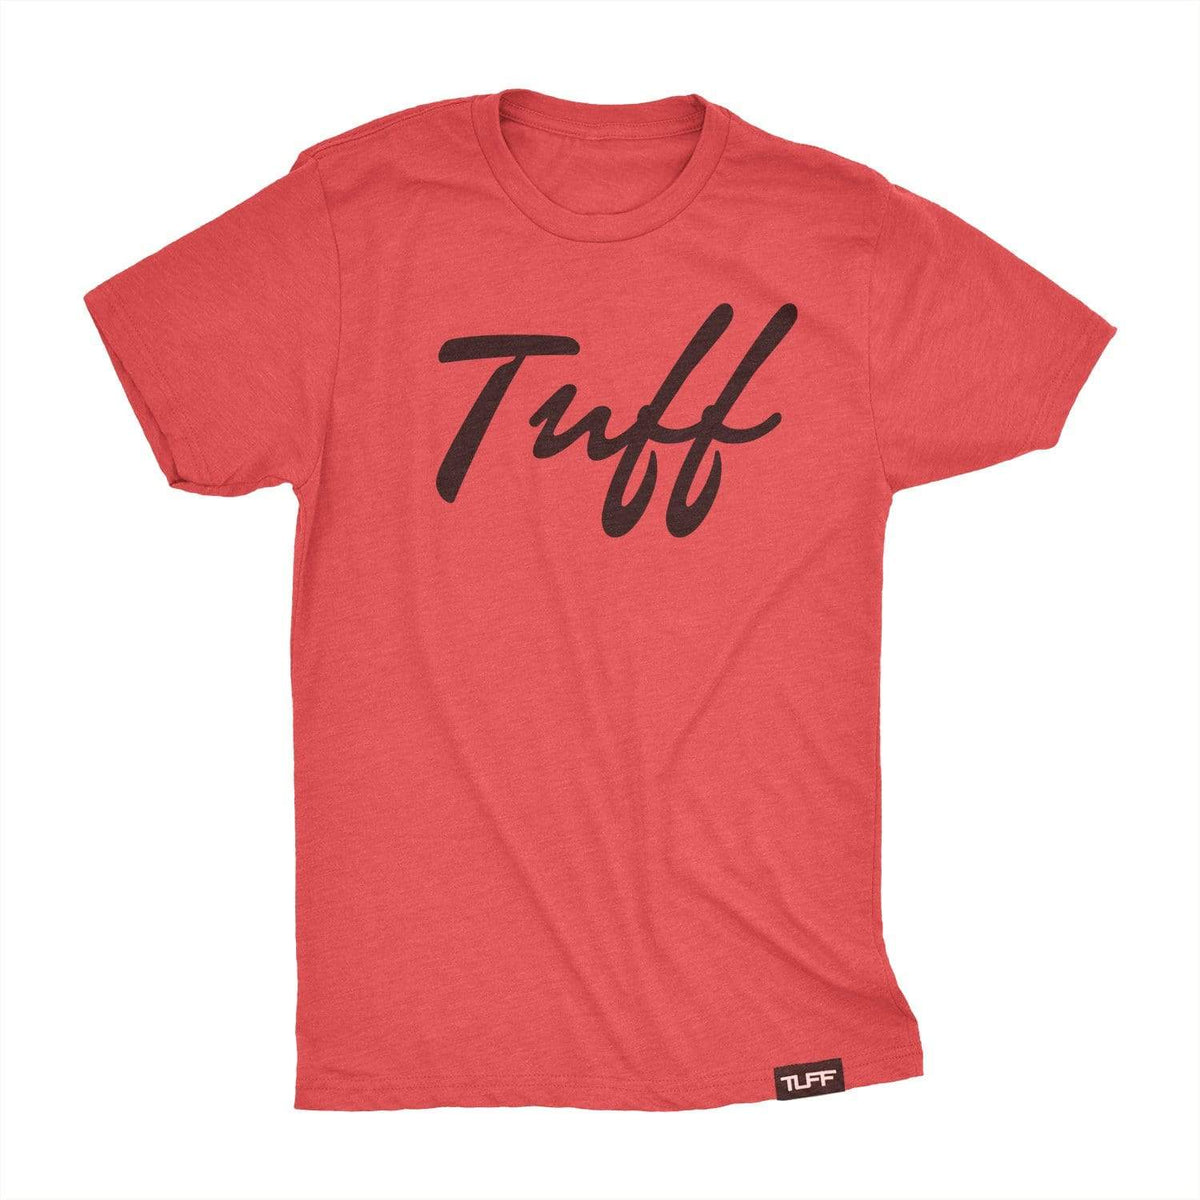 TUFF Thin Script Tee S / Vintage Red TuffWraps.com